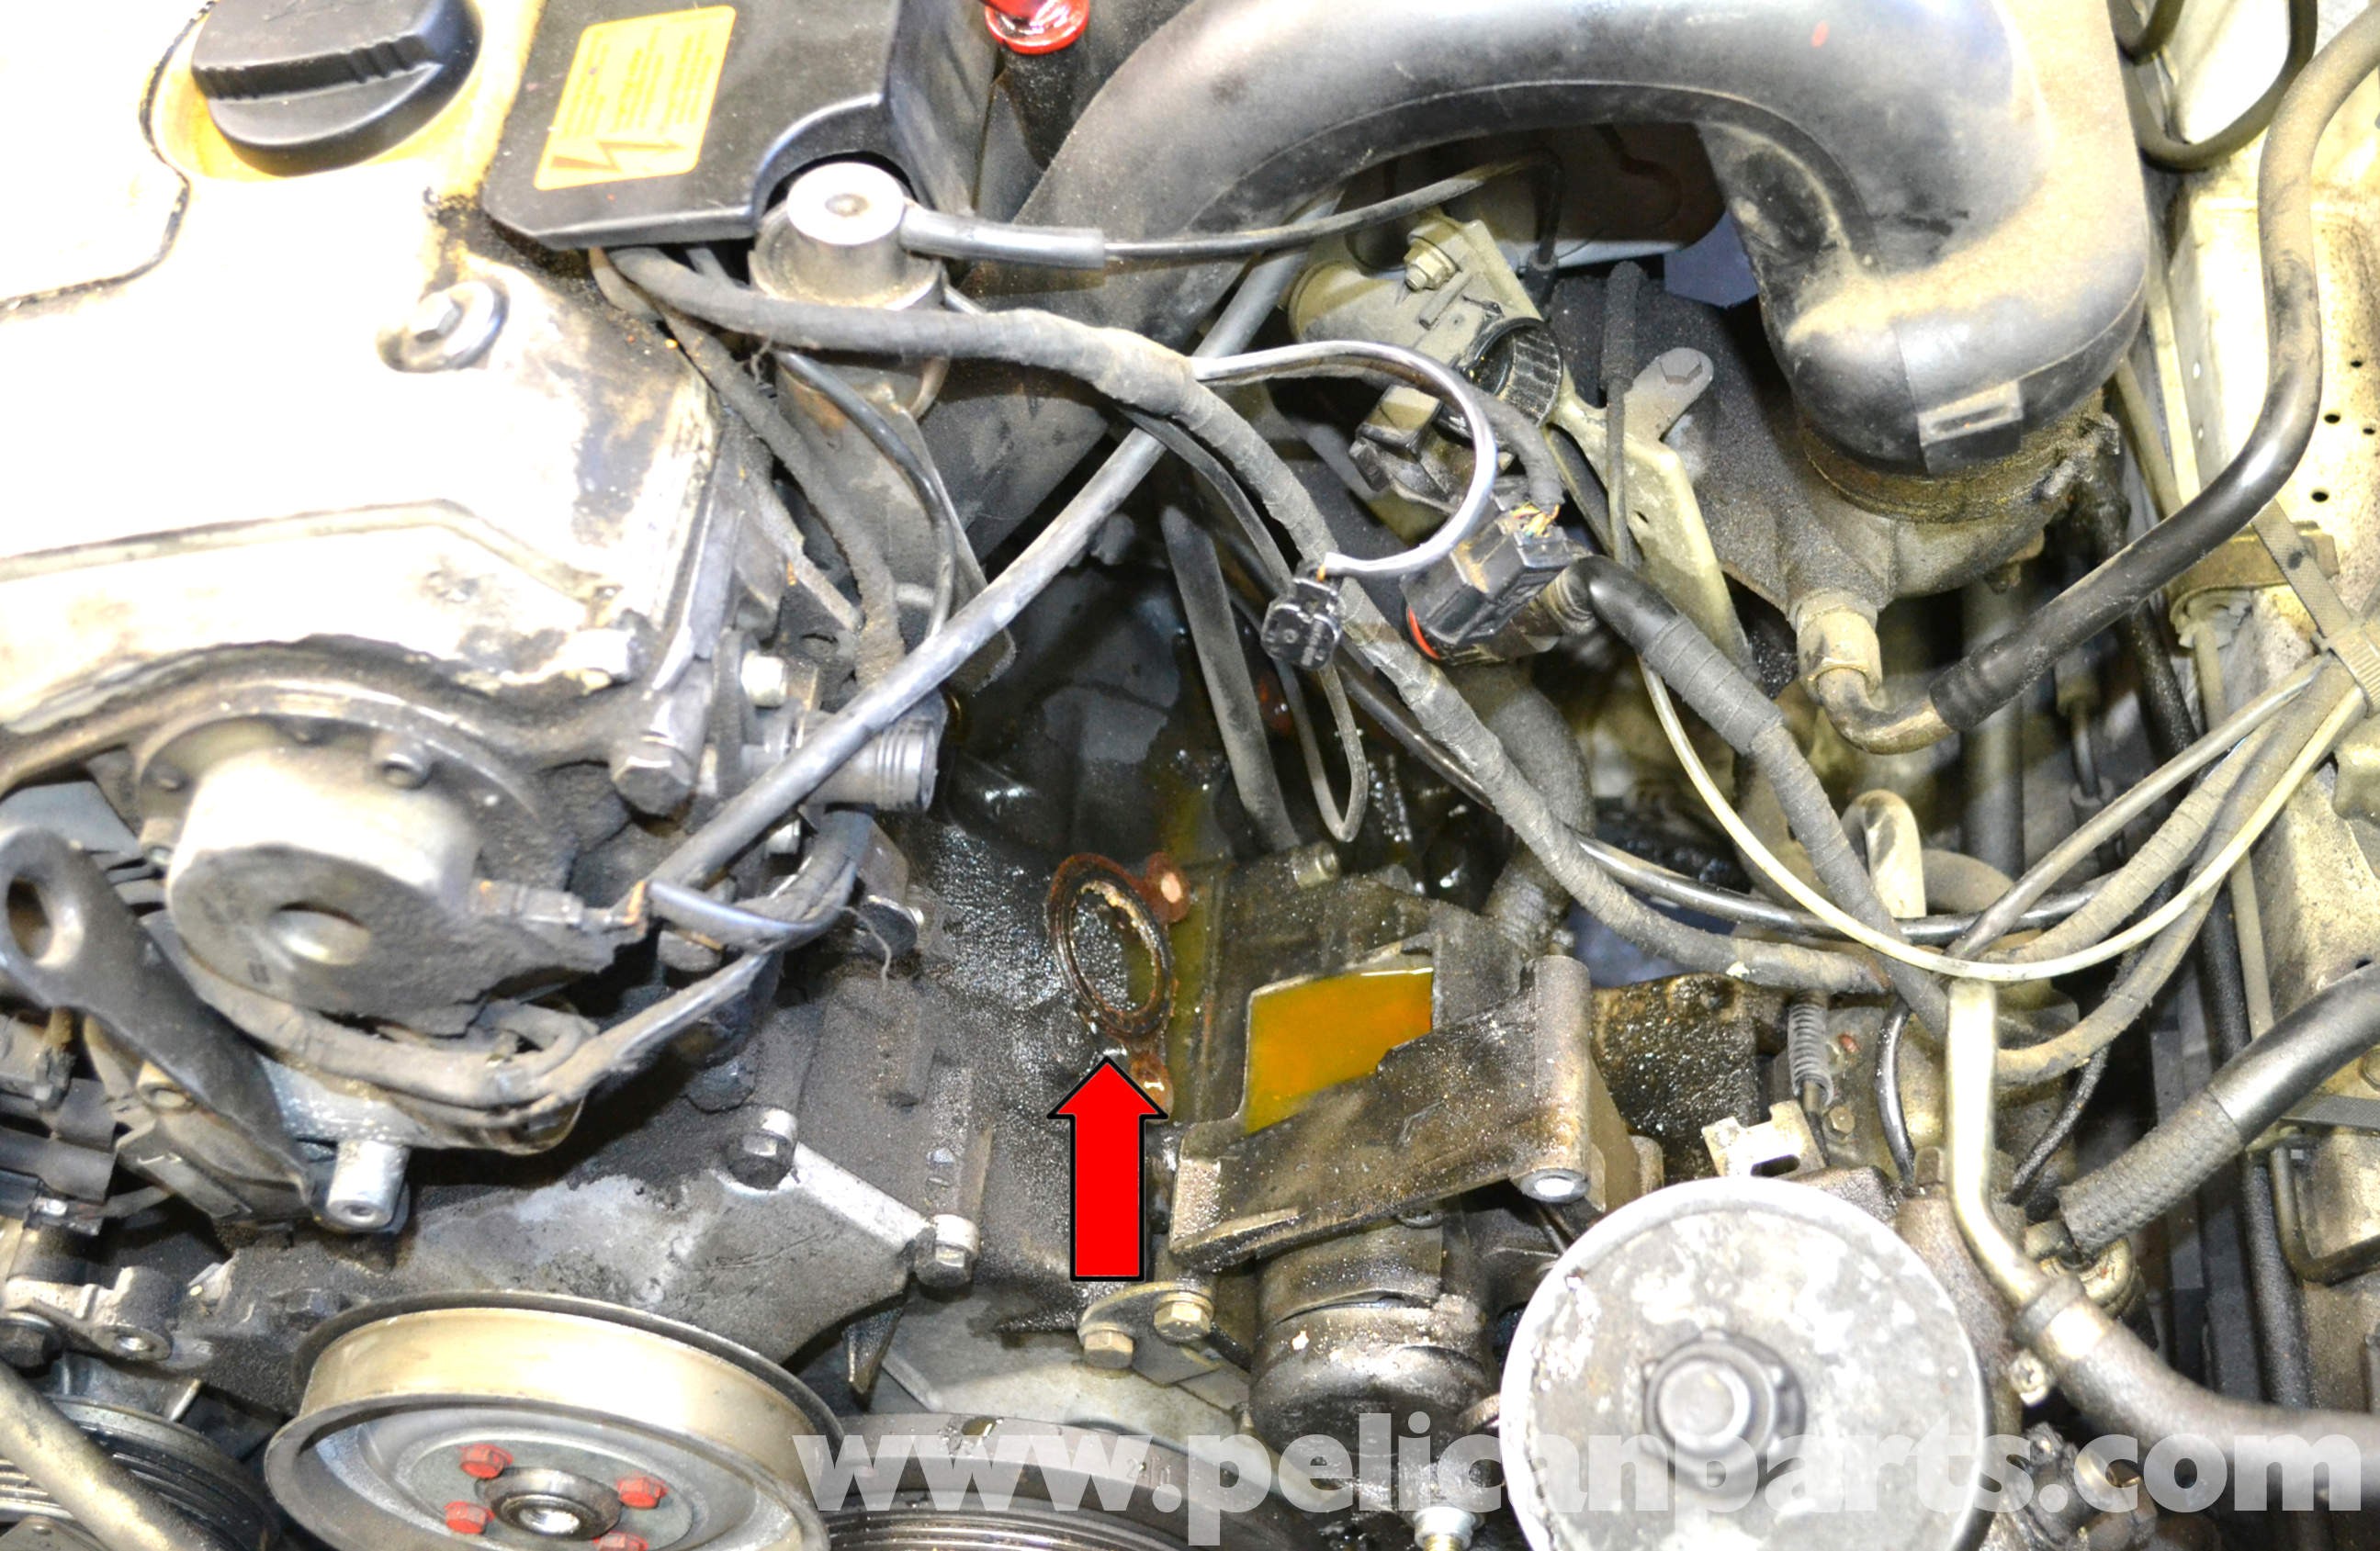 Mercedes M103 Engine Diagram Mercedes Benz W124 Water Pump Replacement